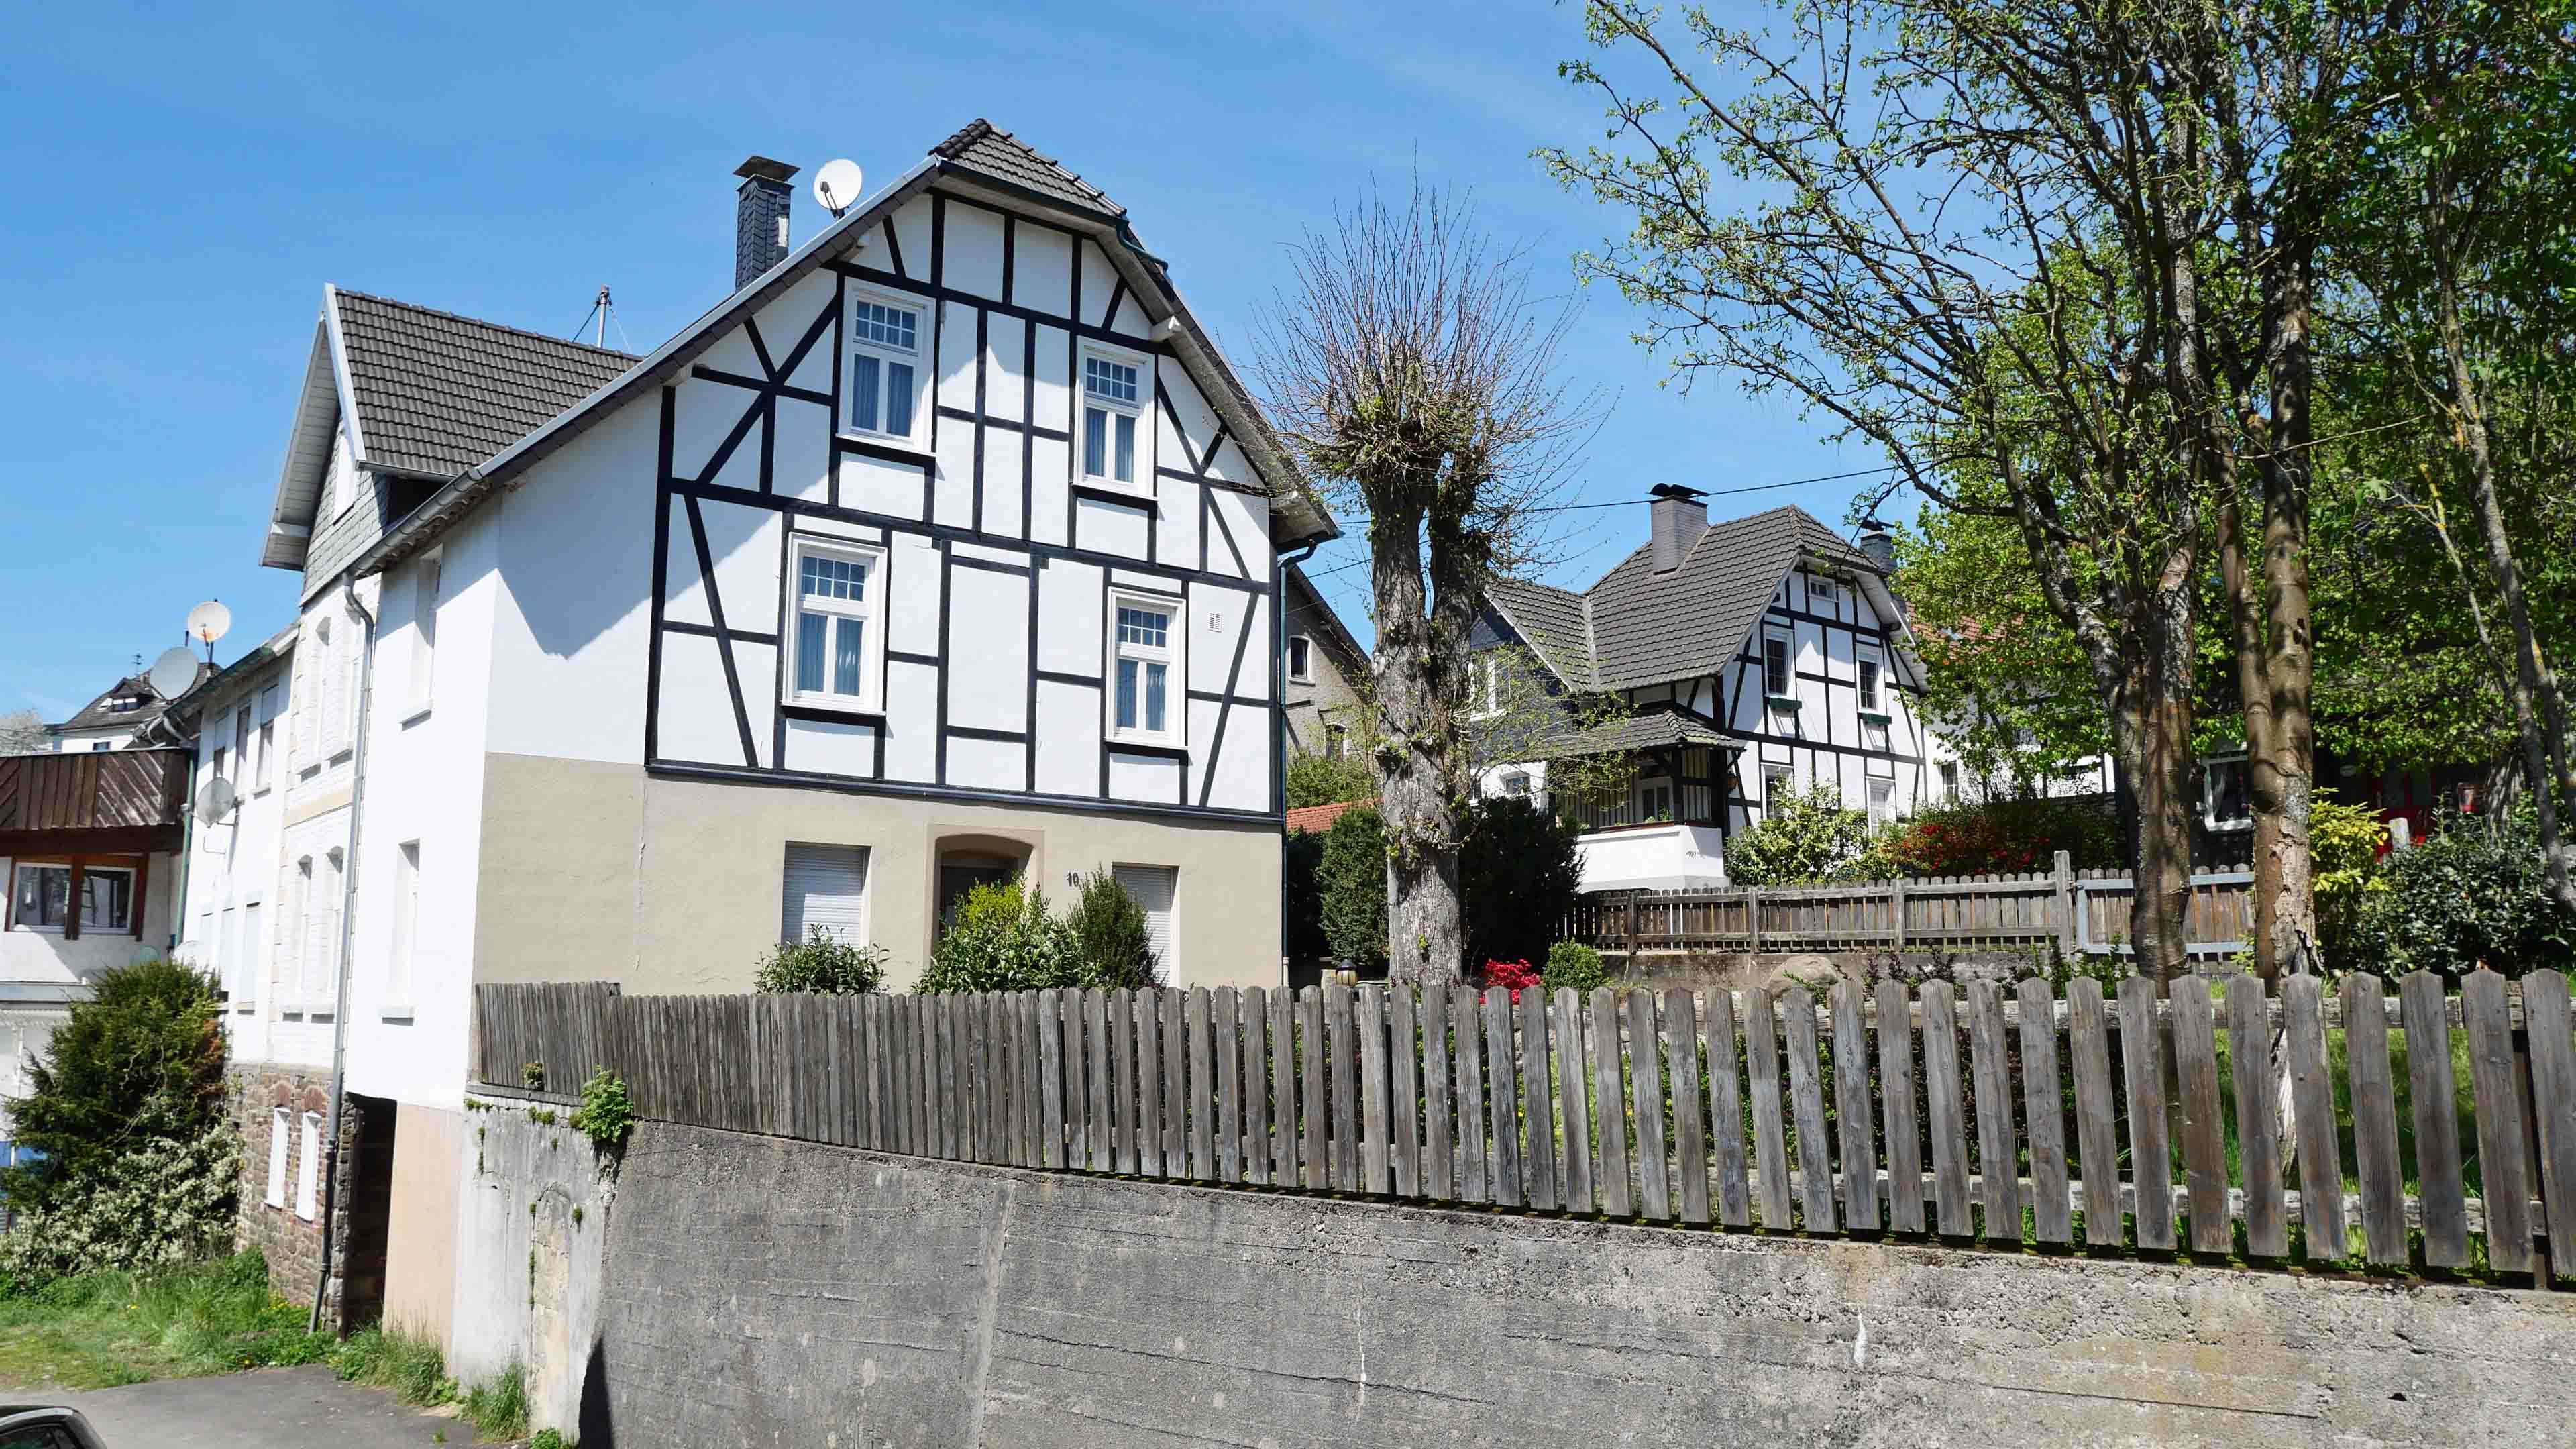 Morsbach: Alles fußläufig erreichbar. Großes, charmantes 1-2-Familienhaus, charmantes Fachwerkhaus in charmanter Umgebung